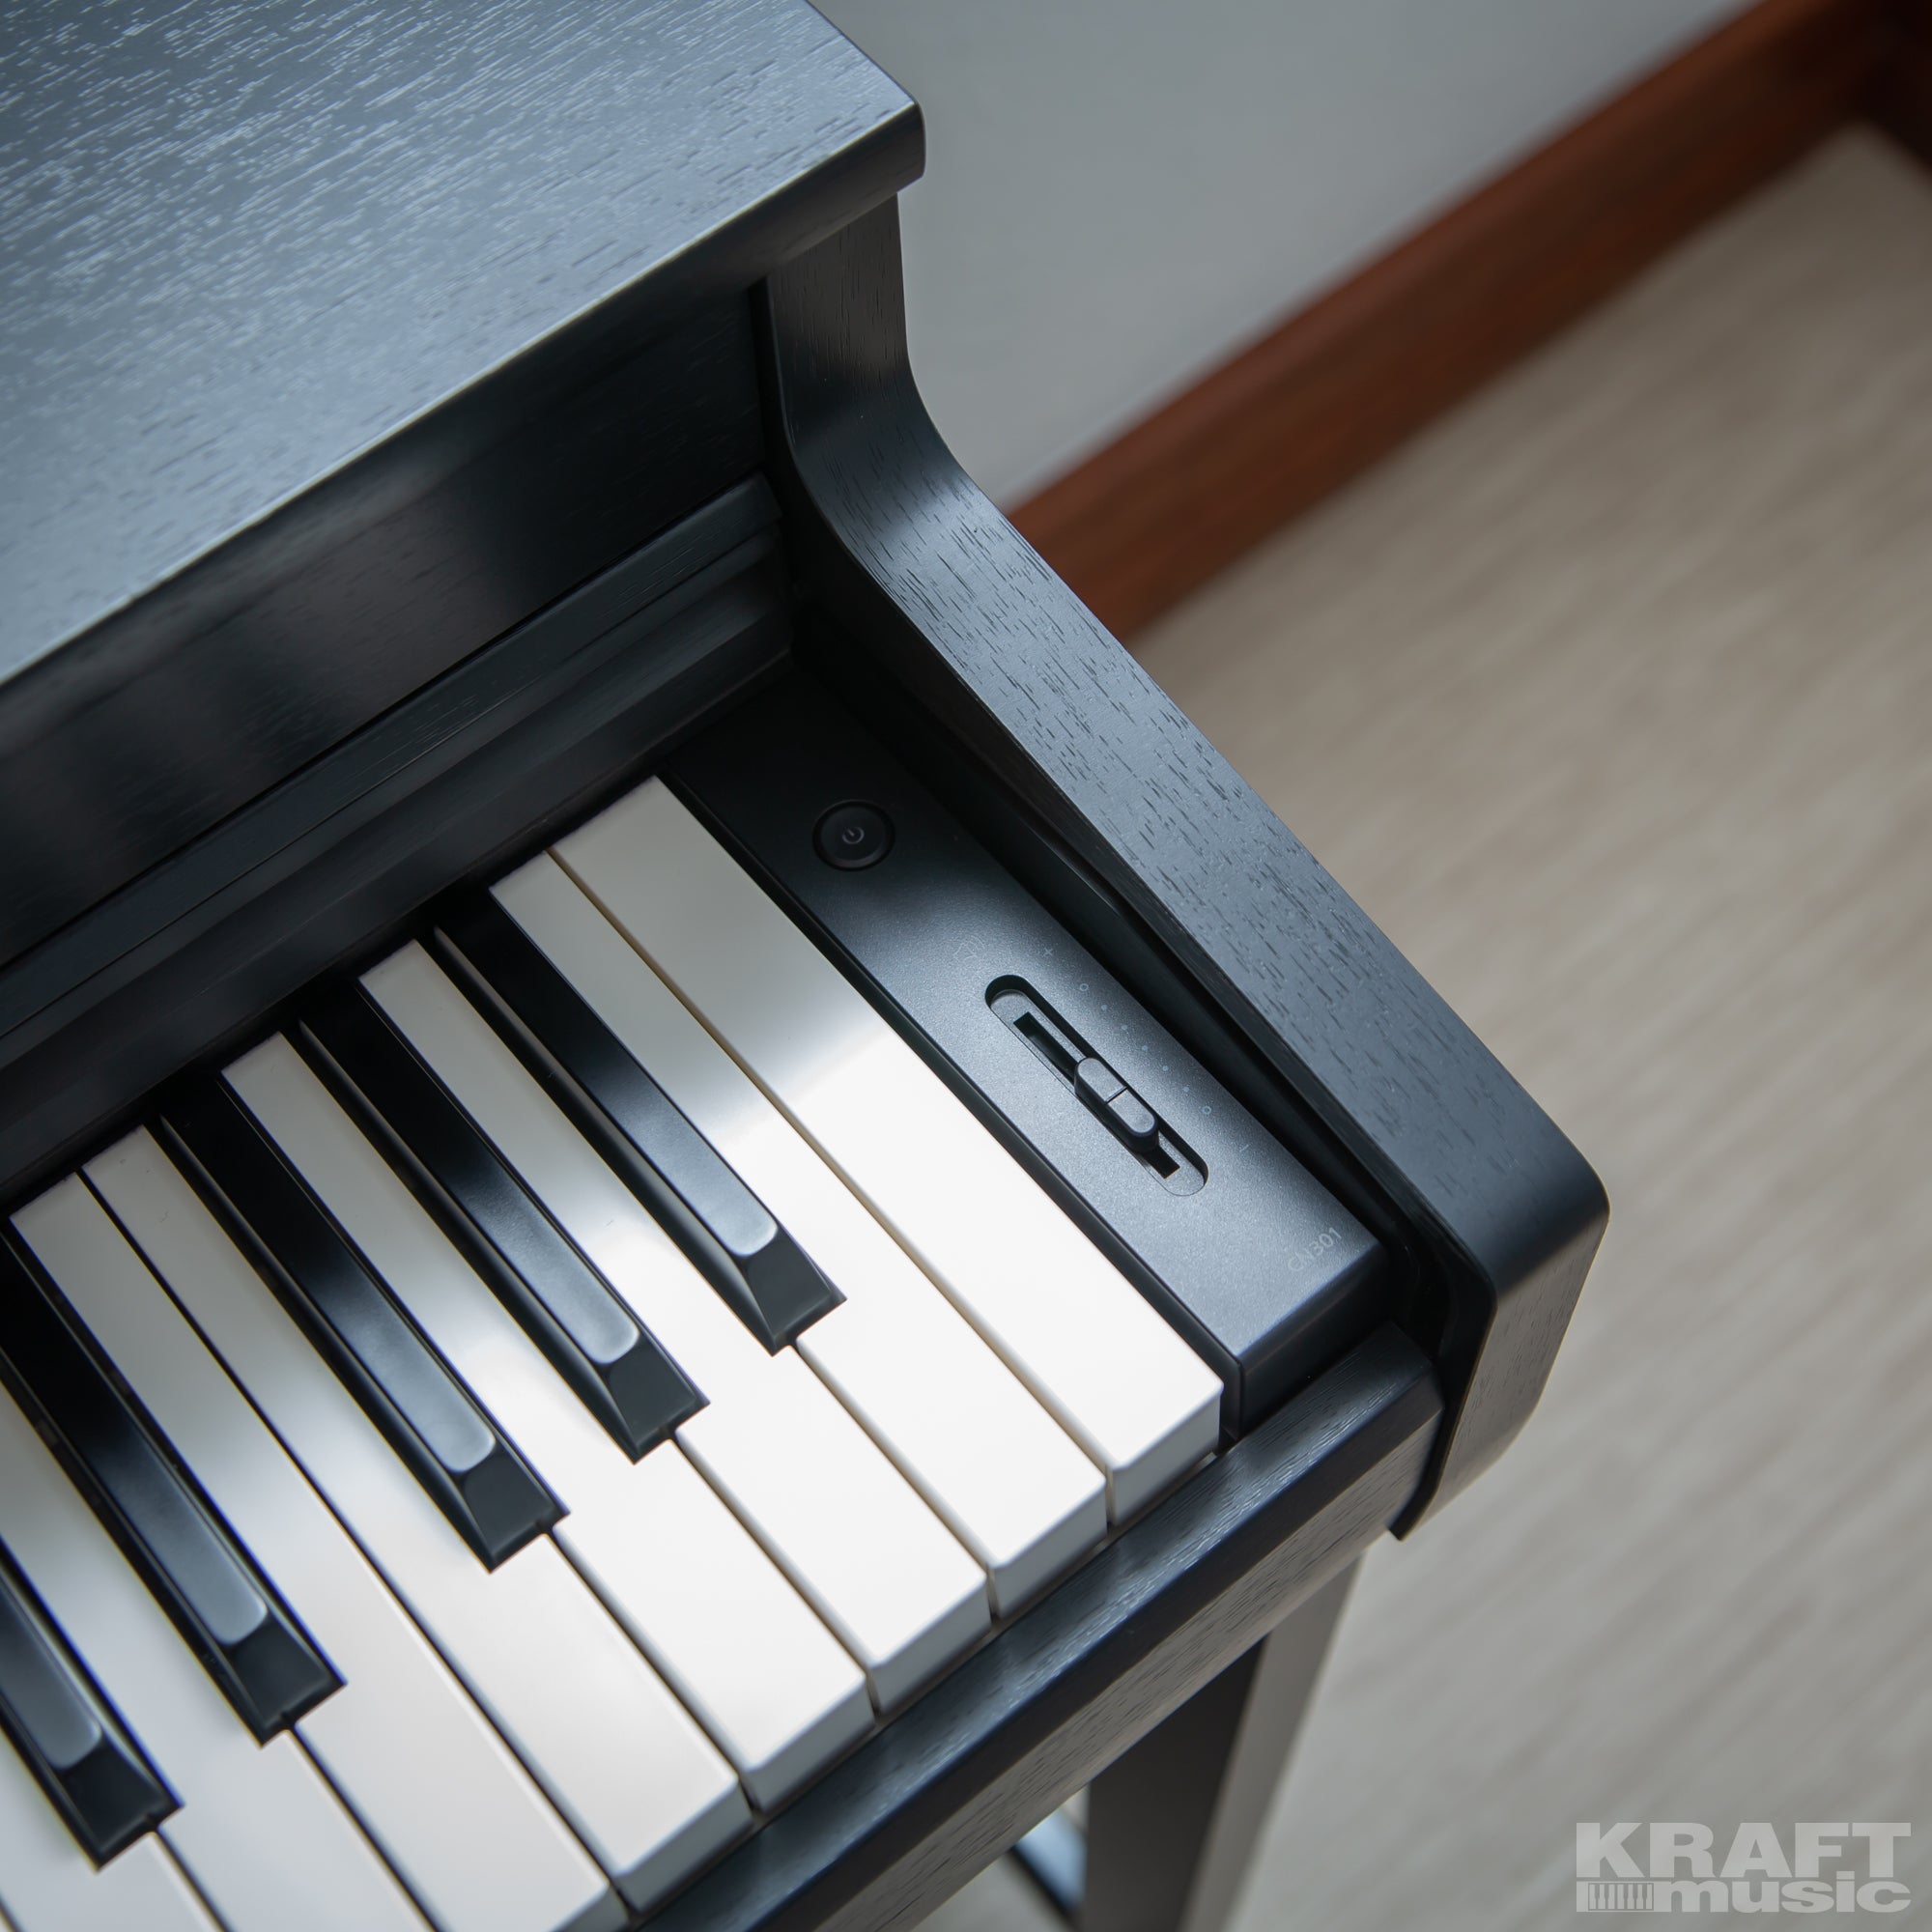 Kawai CN301 Digital Piano - Satin Black - Power and volume controls